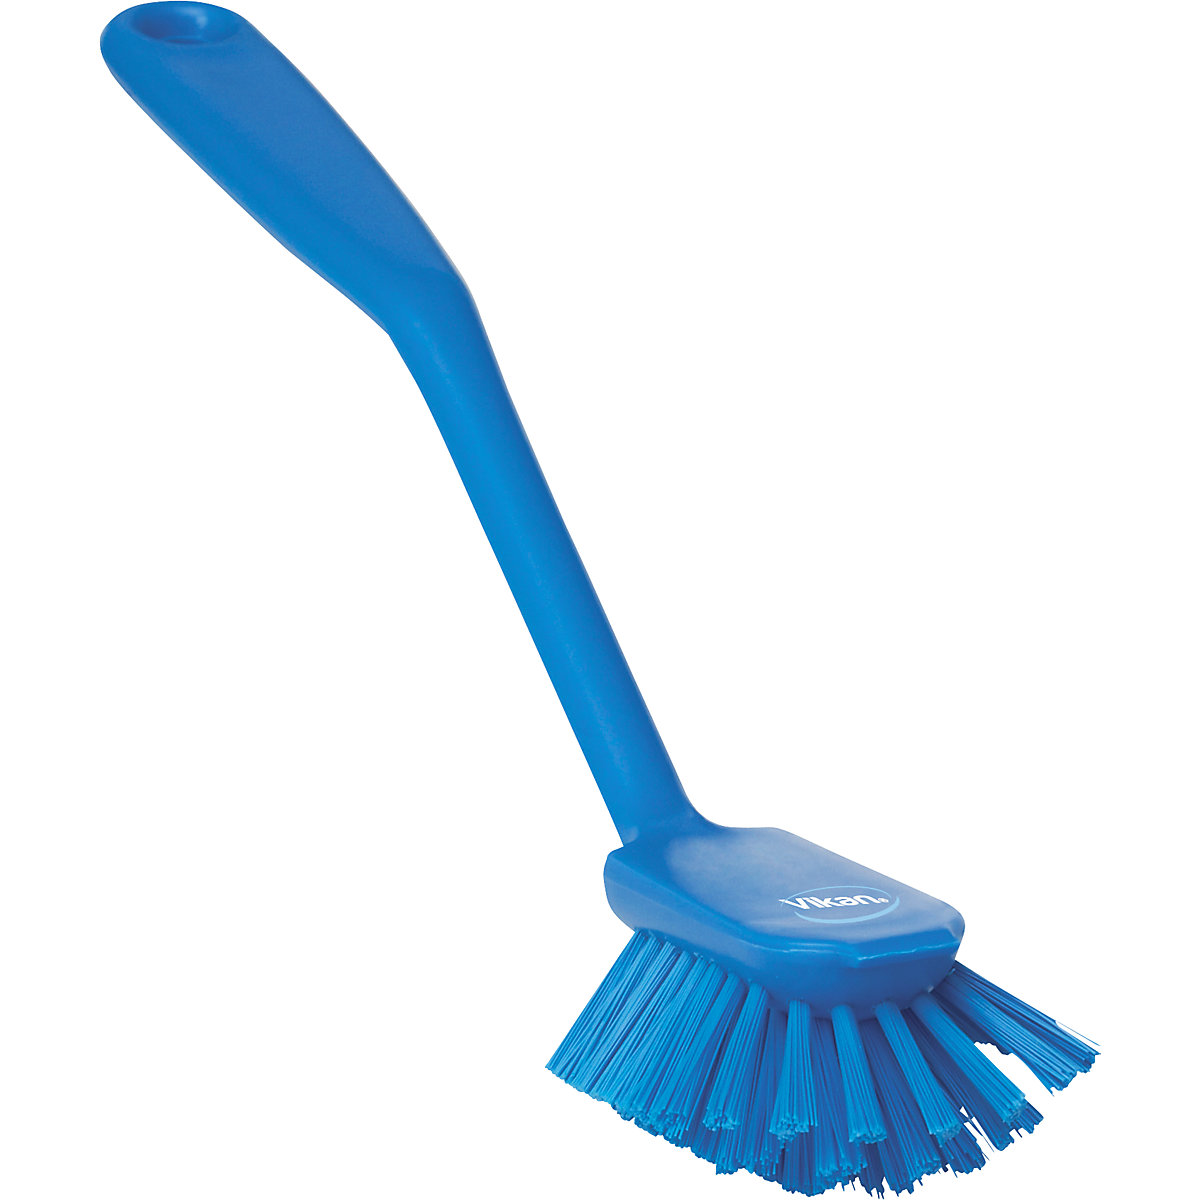 Scrubbing brush with scraper edge – Vikan, medium, pack of 20, blue